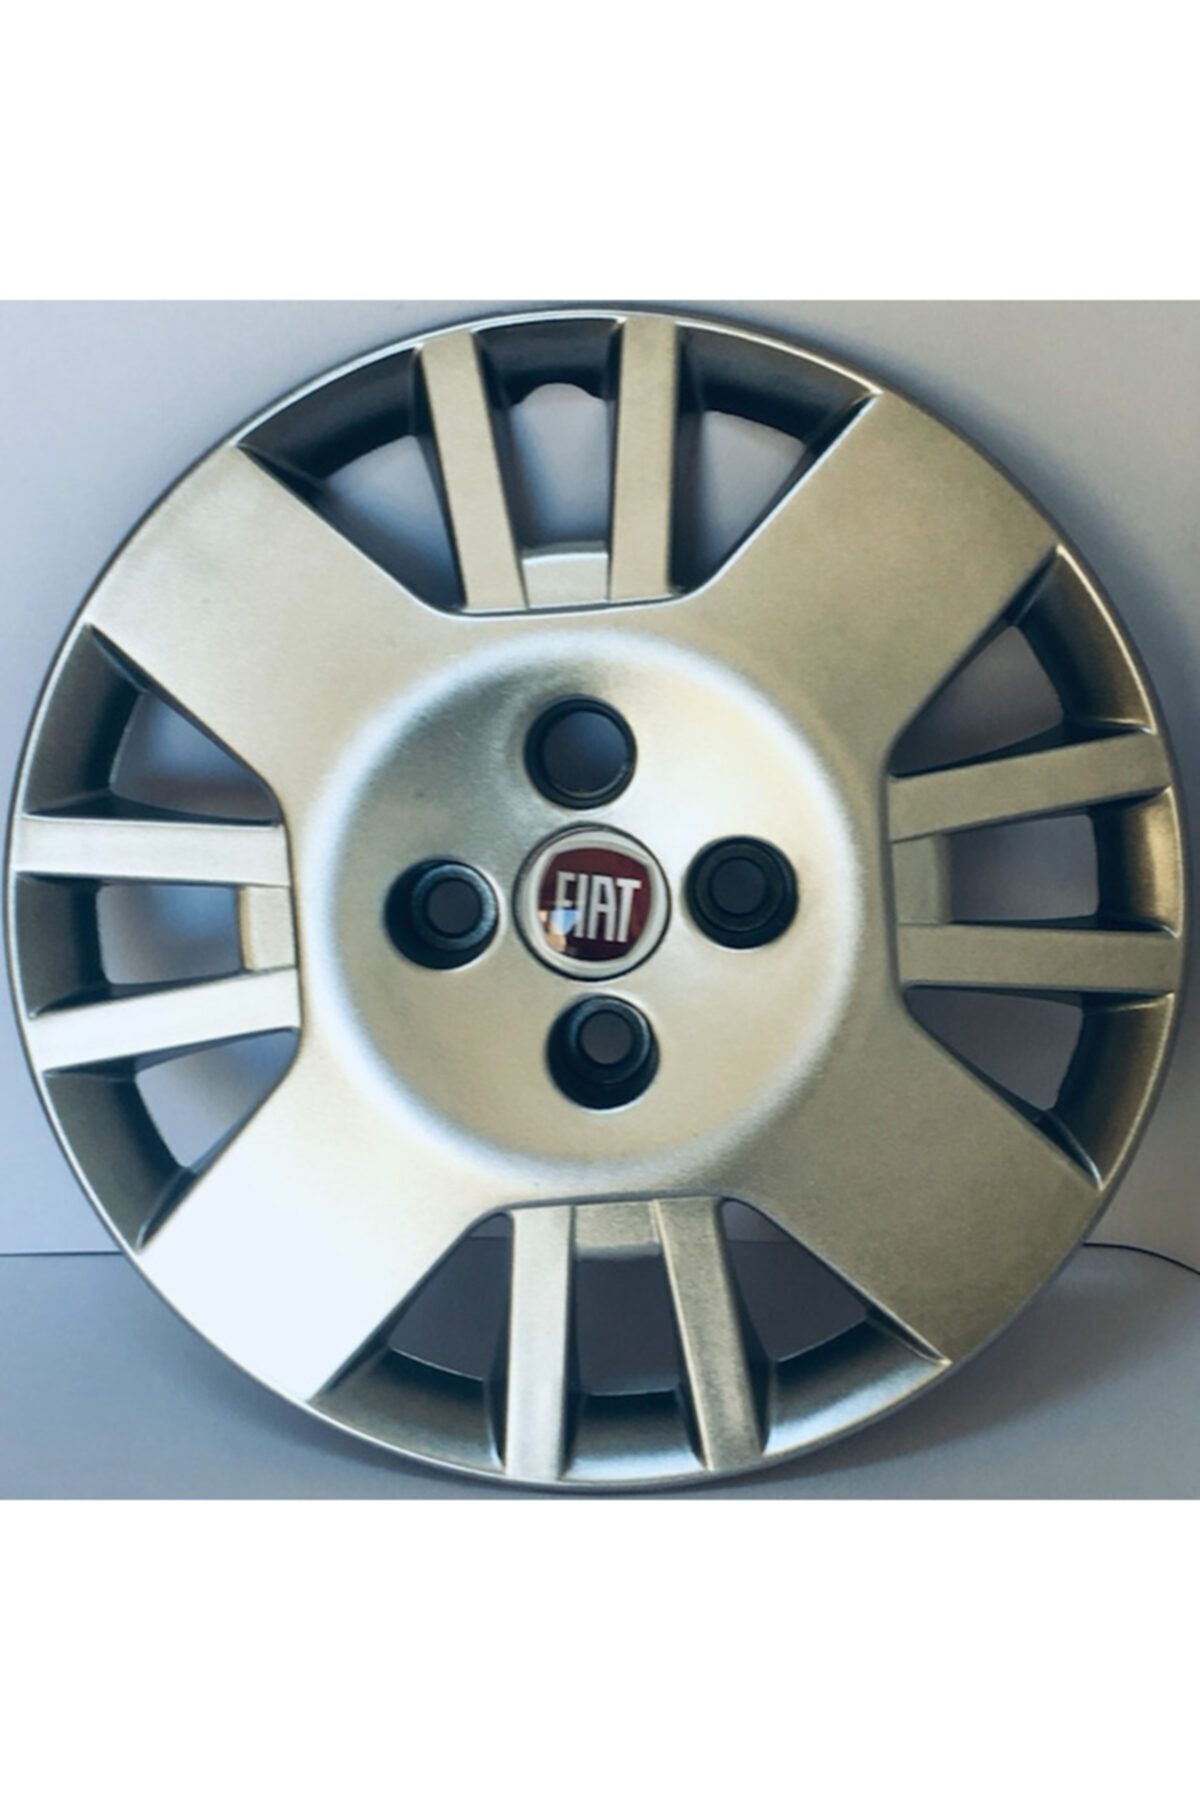 TİSA Fiat Fiorino 14" Jant Kapağı 4'lü Takım Jkf014